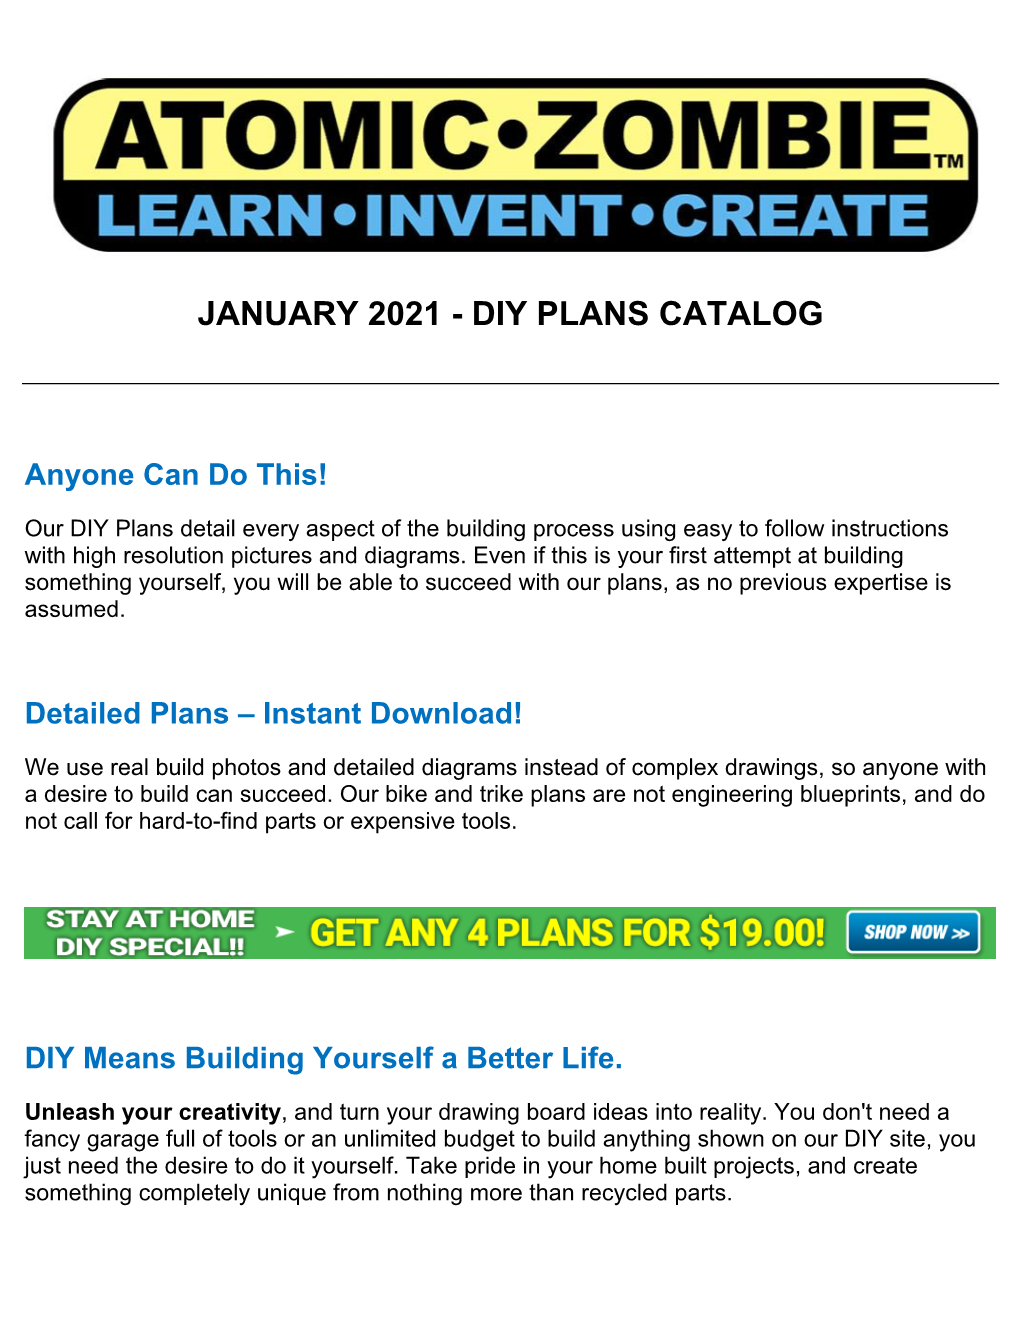 January 2021 - Diy Plans Catalog